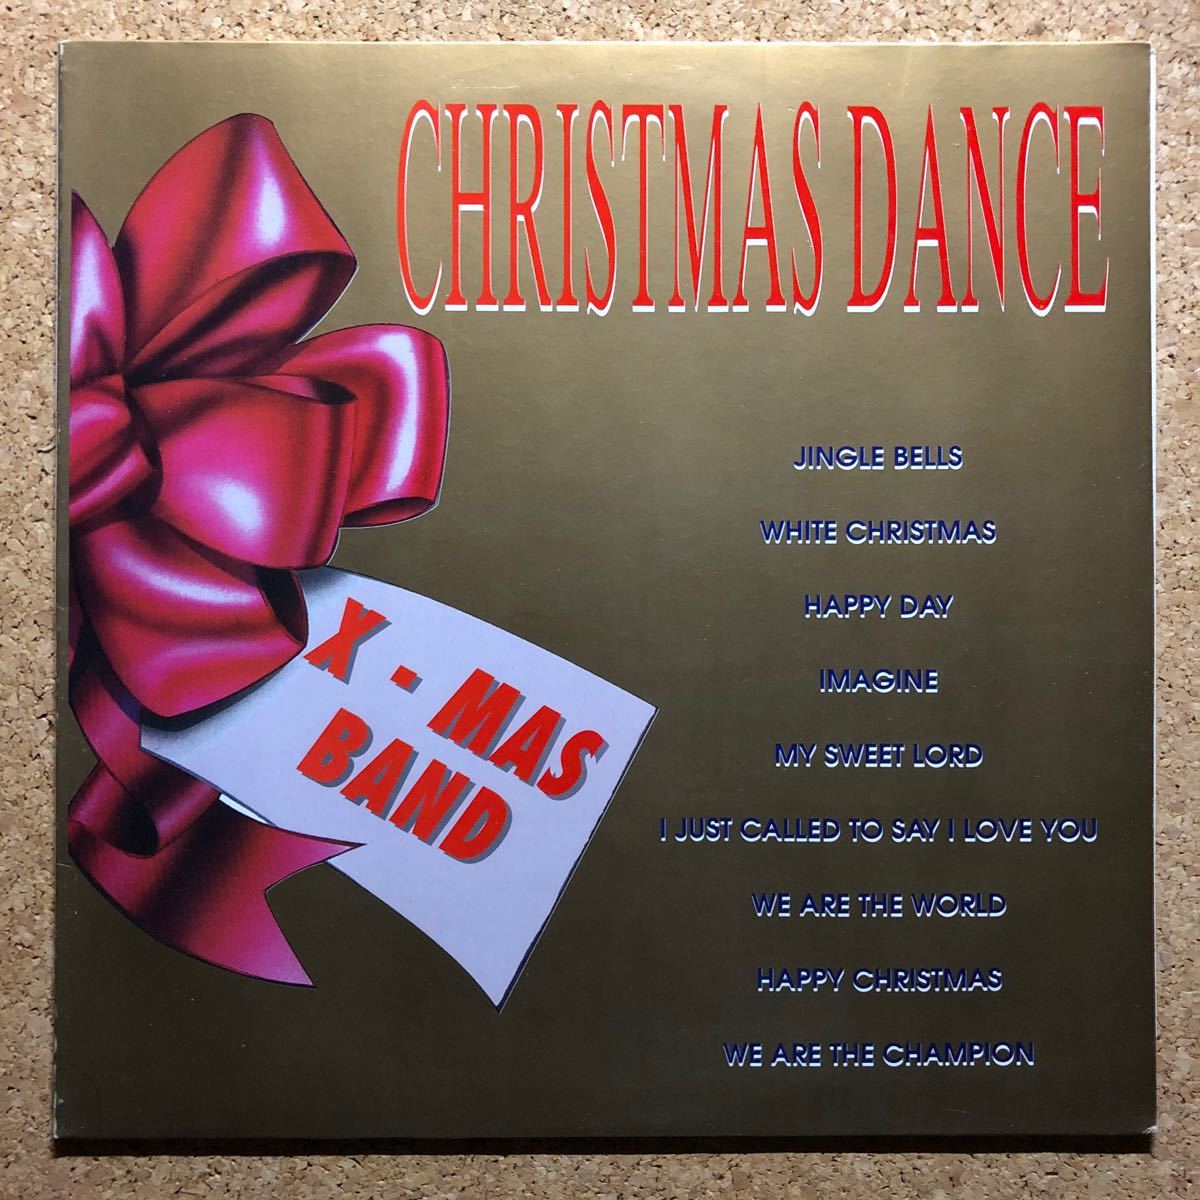 【r&b】X-Mas Band / Christmas Dance［12inch Album］オリジナル盤《O-300》